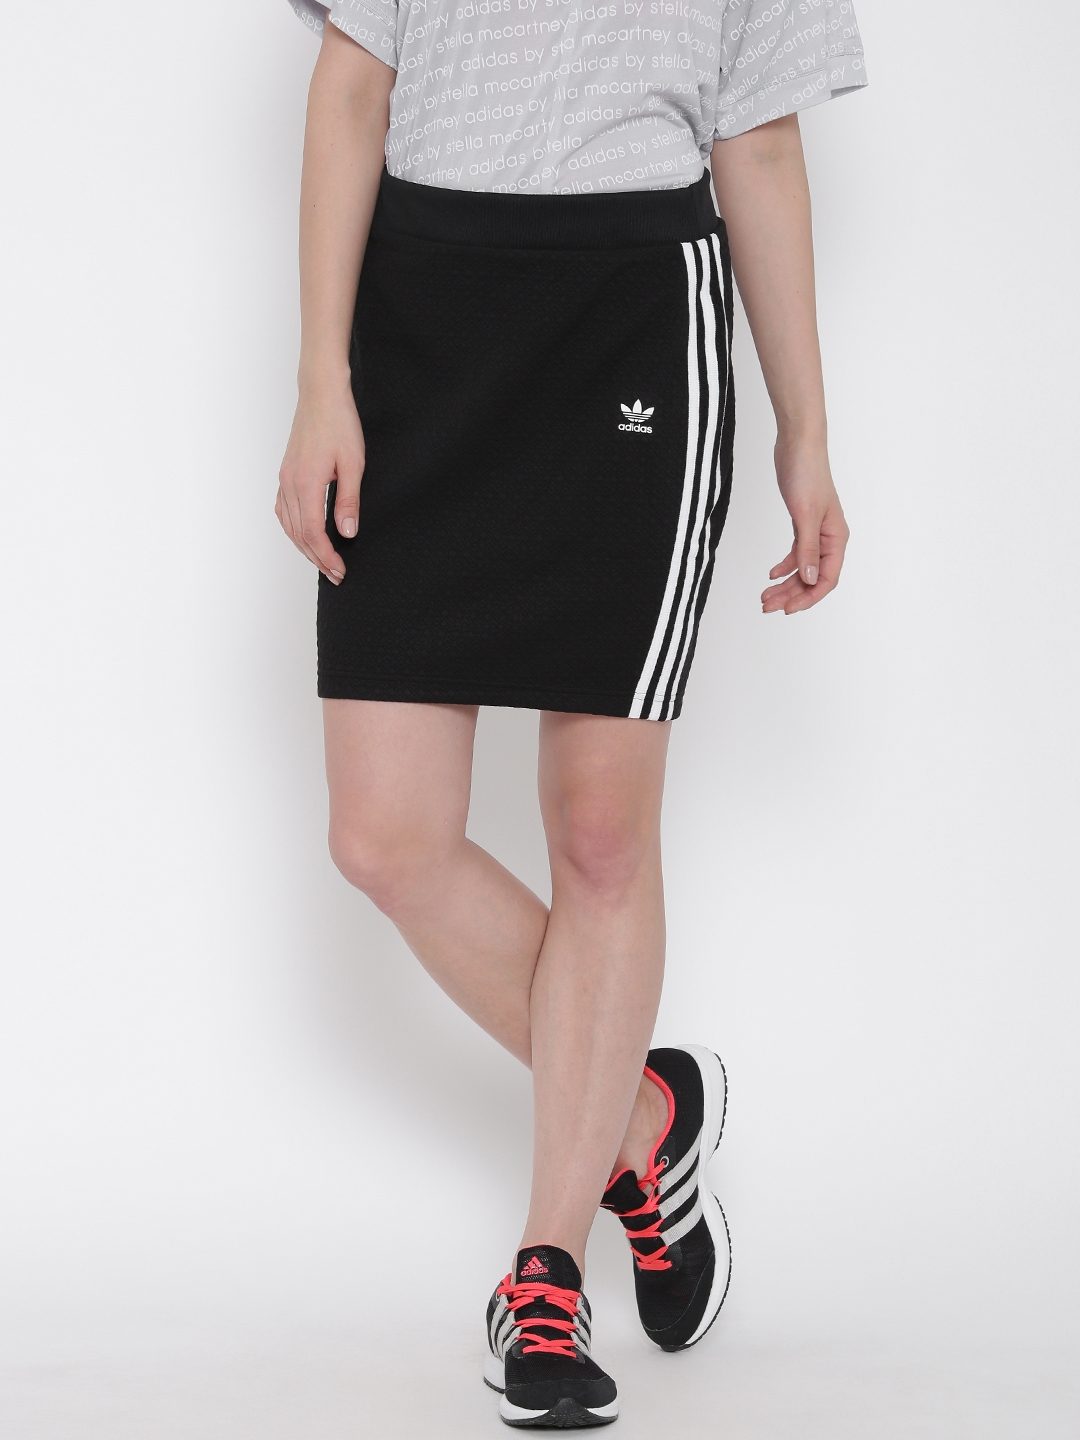 DANIELLE GUIZIO Skirts  Buy DANIELLE GUIZIO Croc Embossed Mini Skirt  Online  Nykaa Fashion